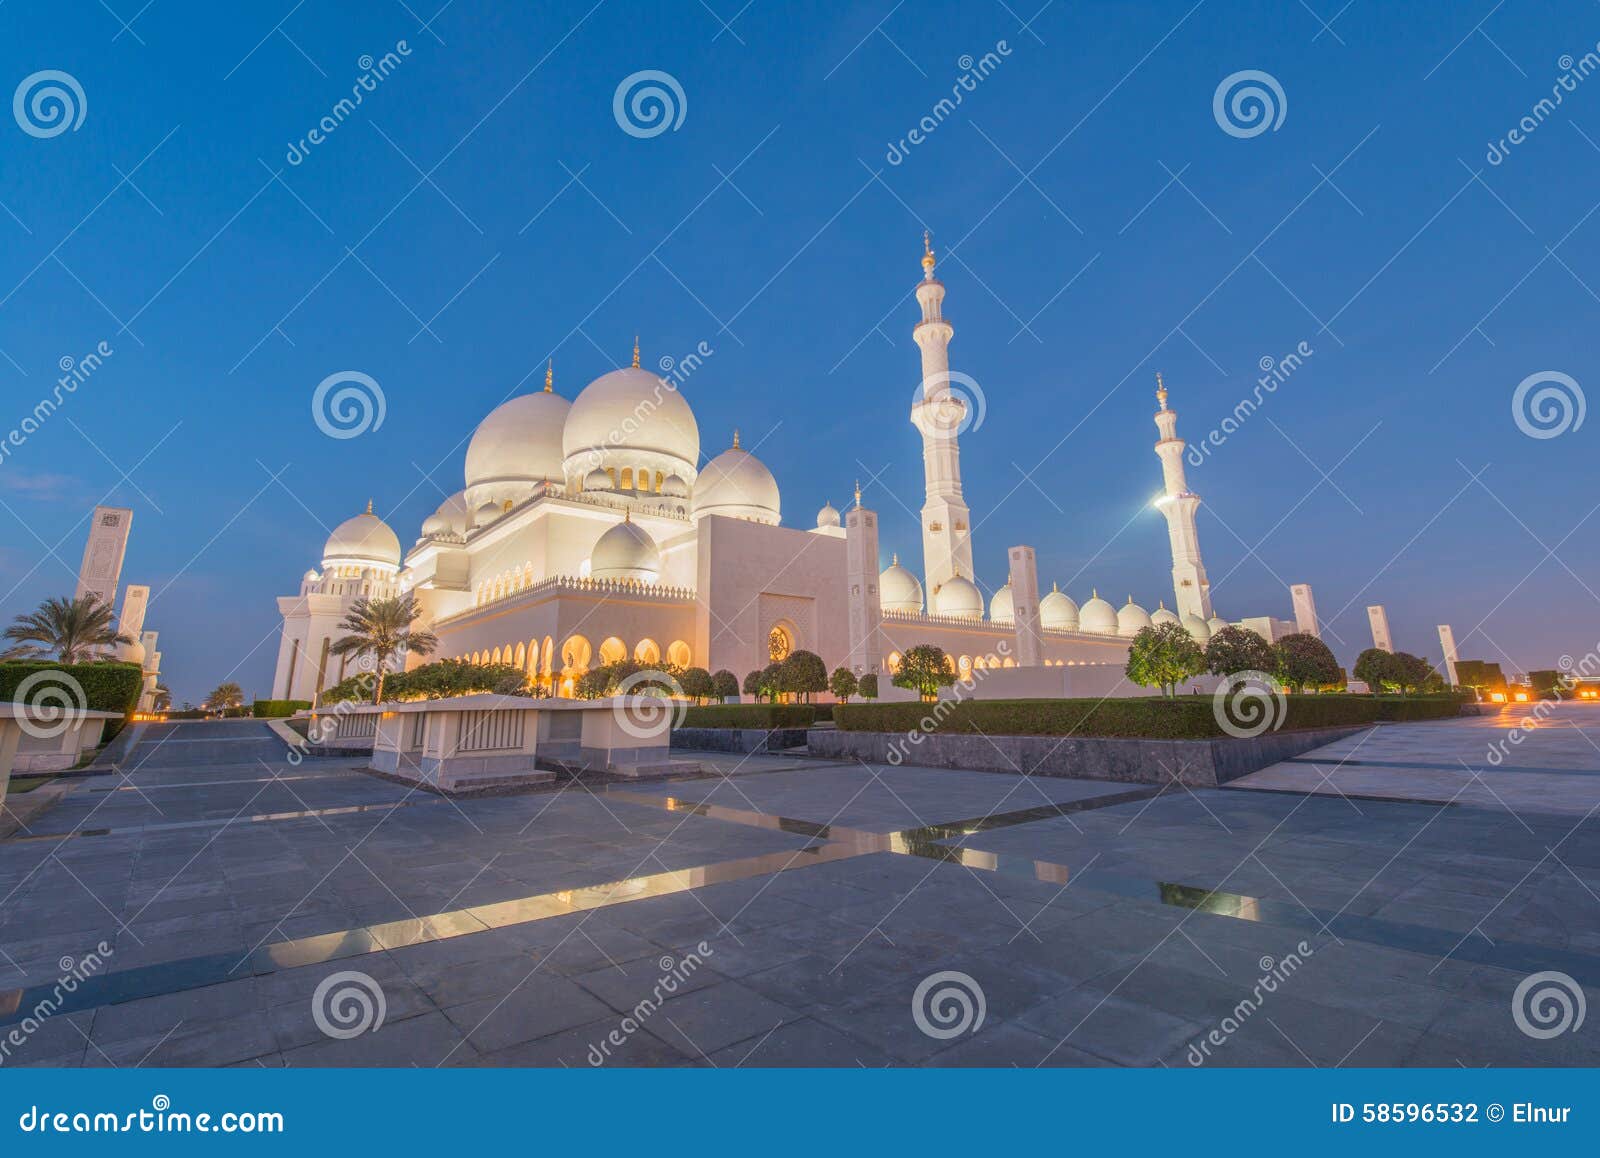 sheikh zayed mosque in abu dabi